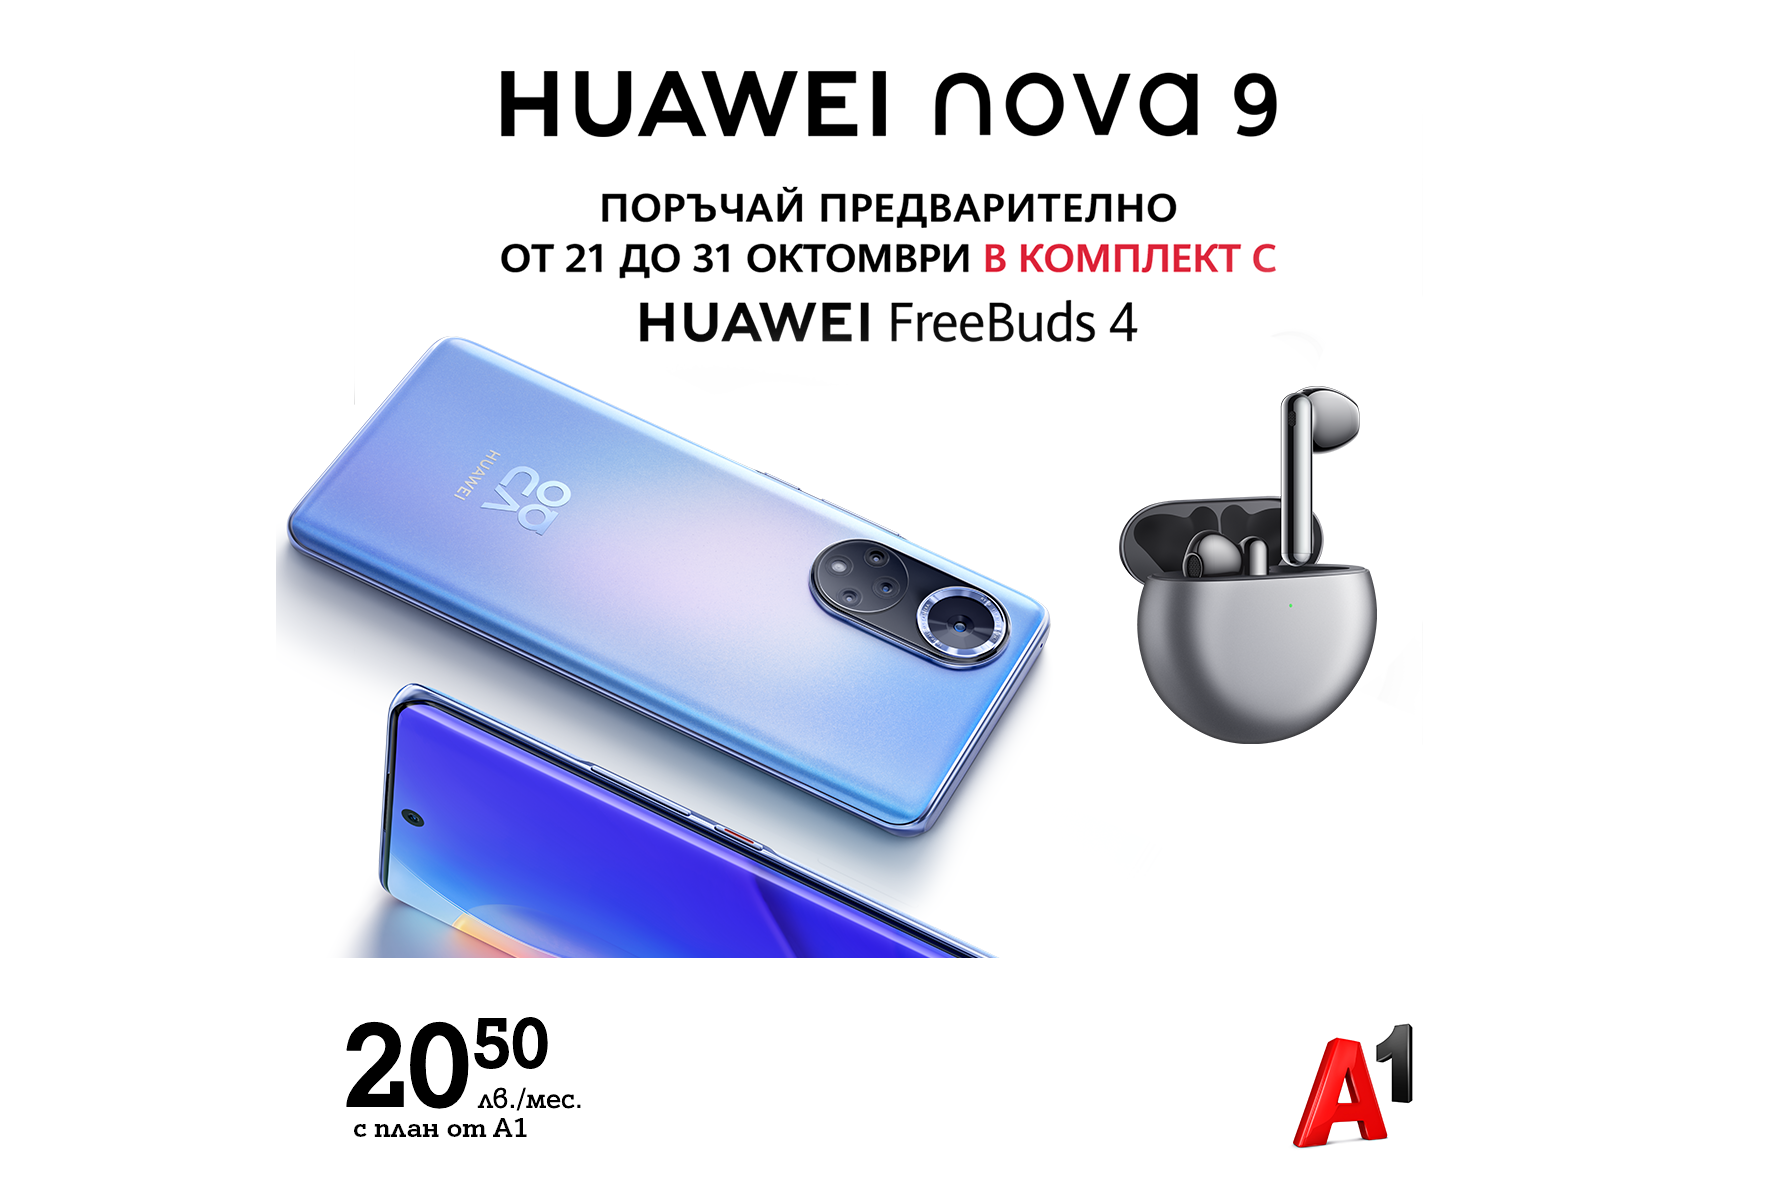 A1 Huawei Nova 9